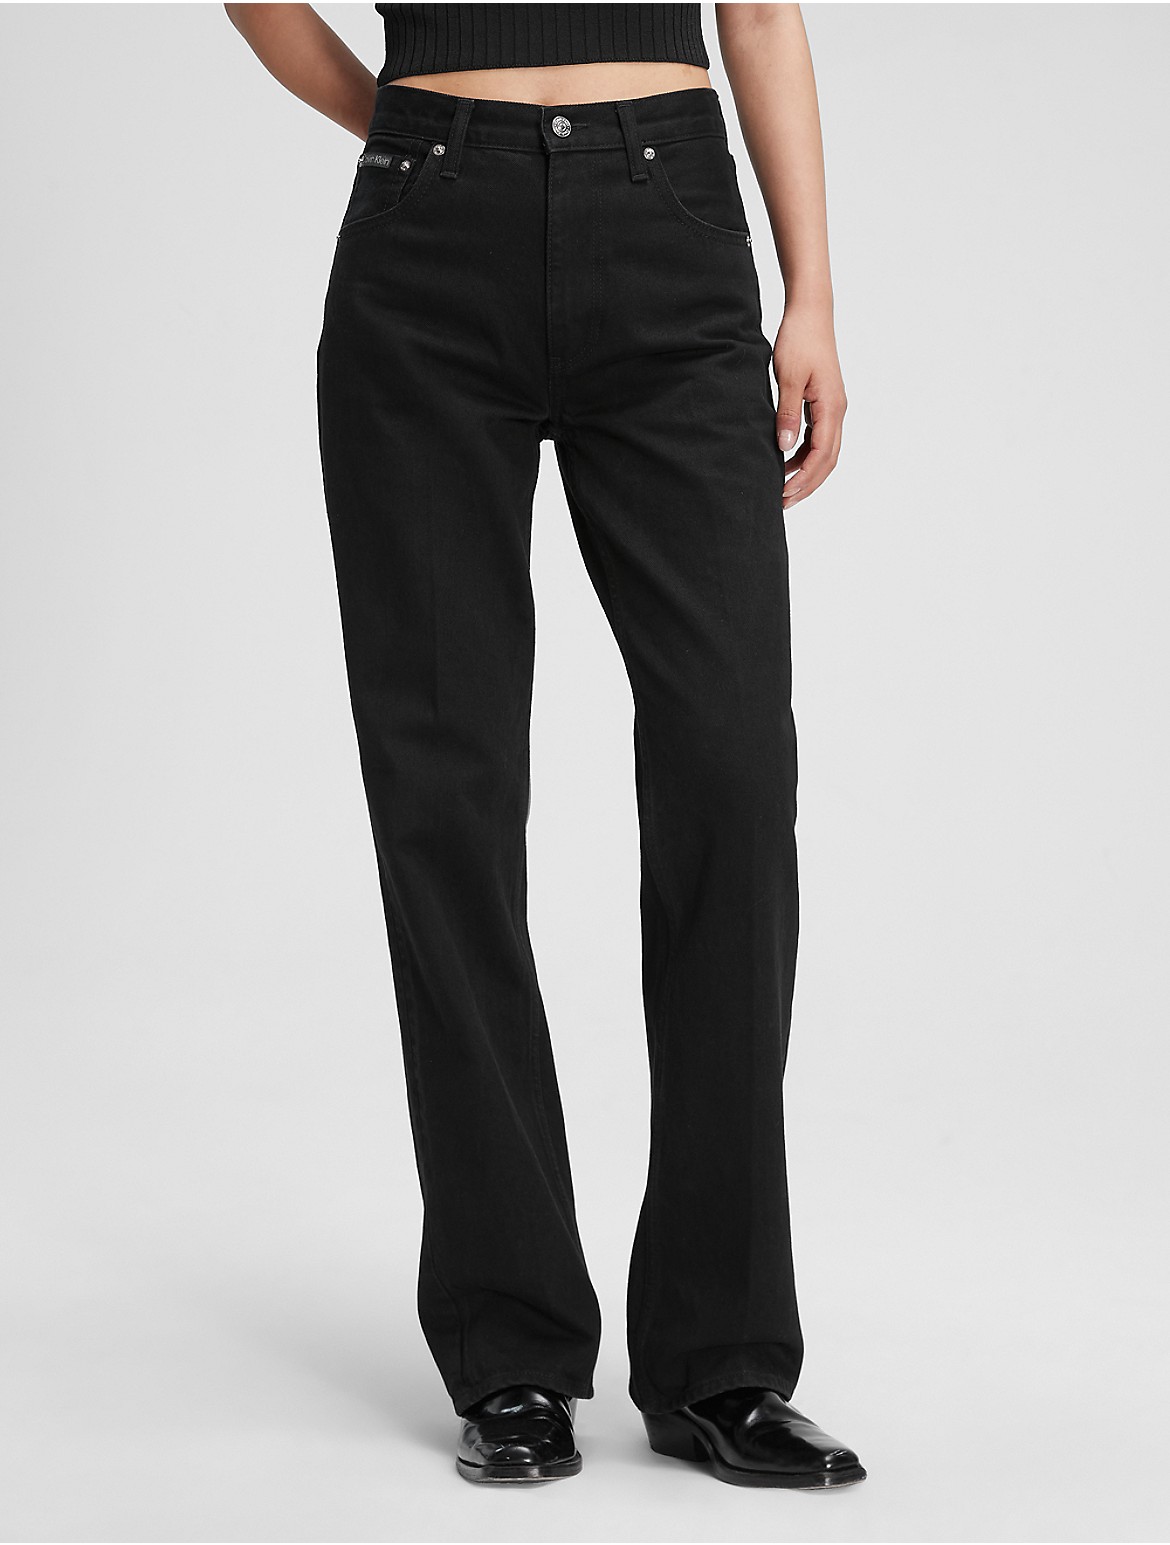 Calvin Klein Women's Original Bootcut Fit Jeans - Black - 24